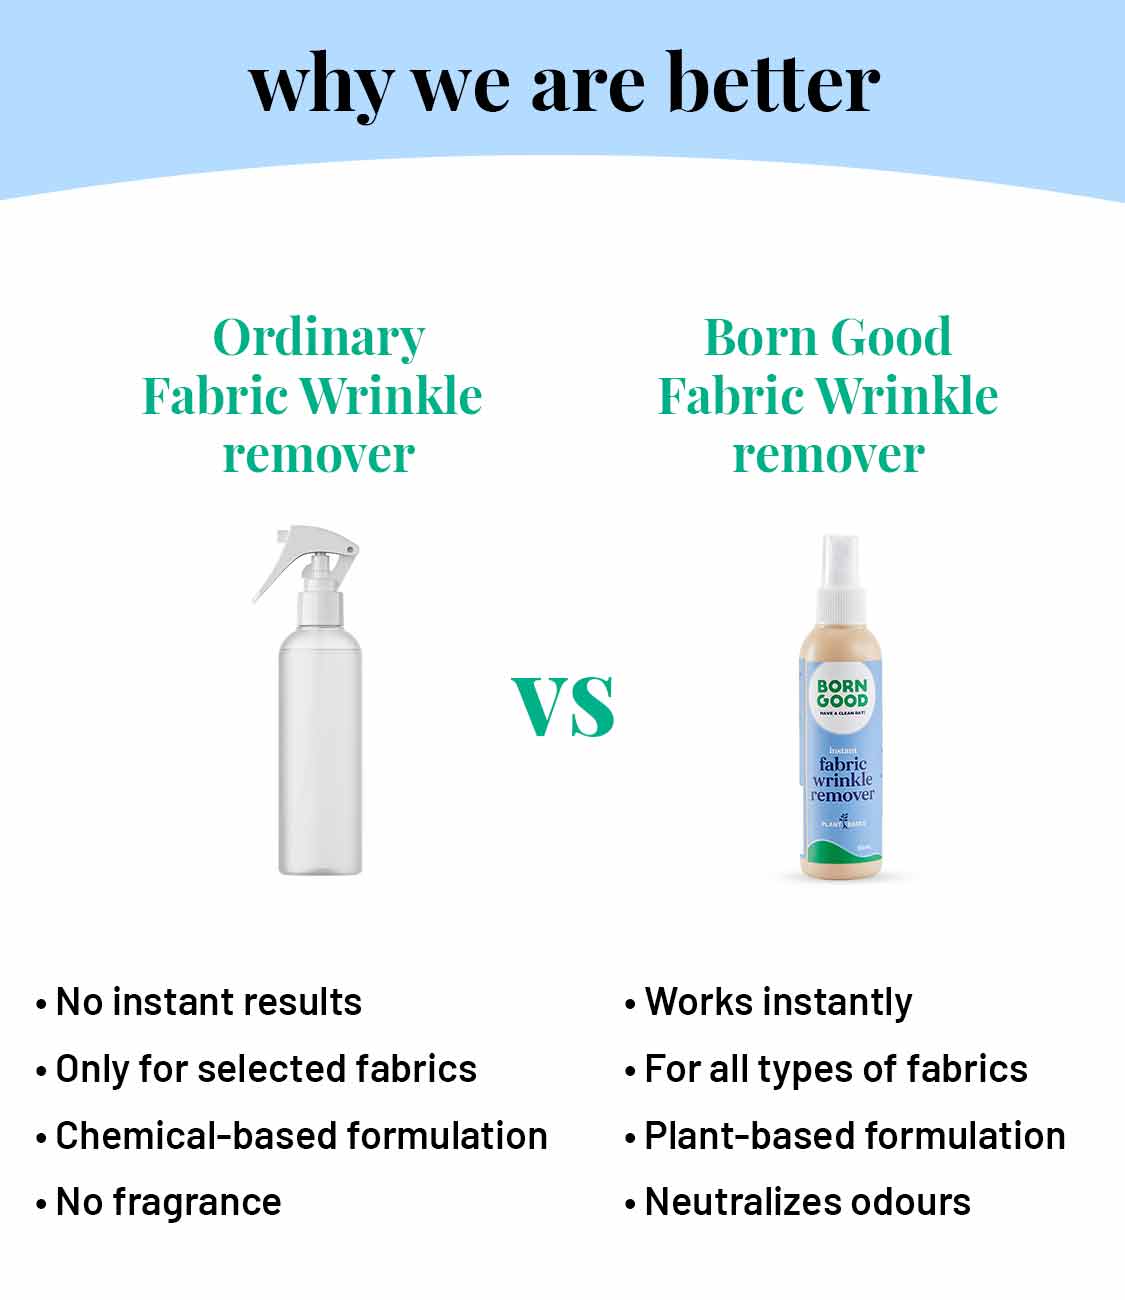 Born Good Plant-based Fabric Wrinkle Remover - 100 ml Bottle